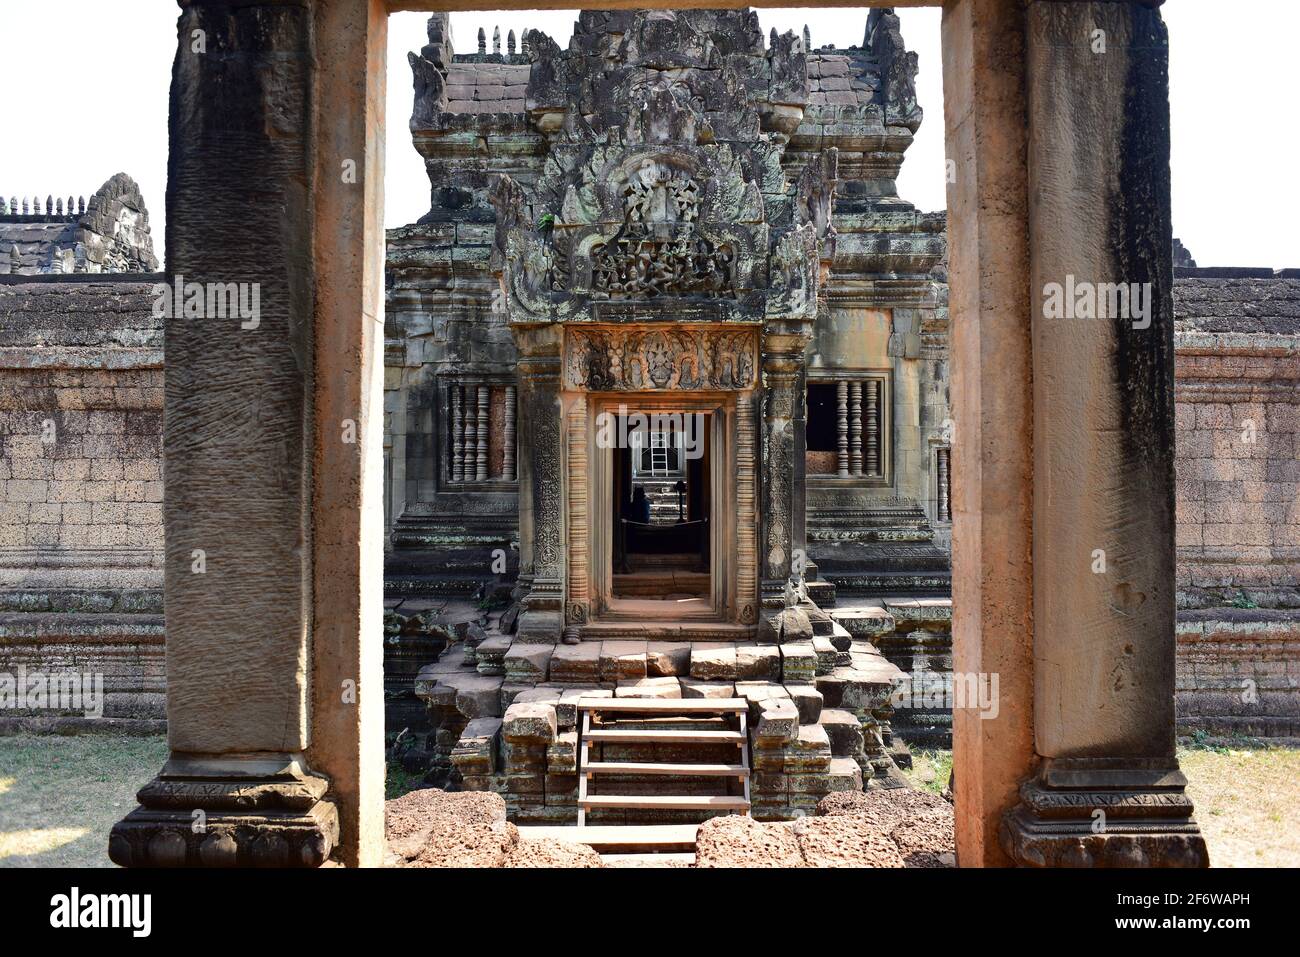 Banteay Samre temple. Angkor, Siem Reap, Cambodia. Stock Photo